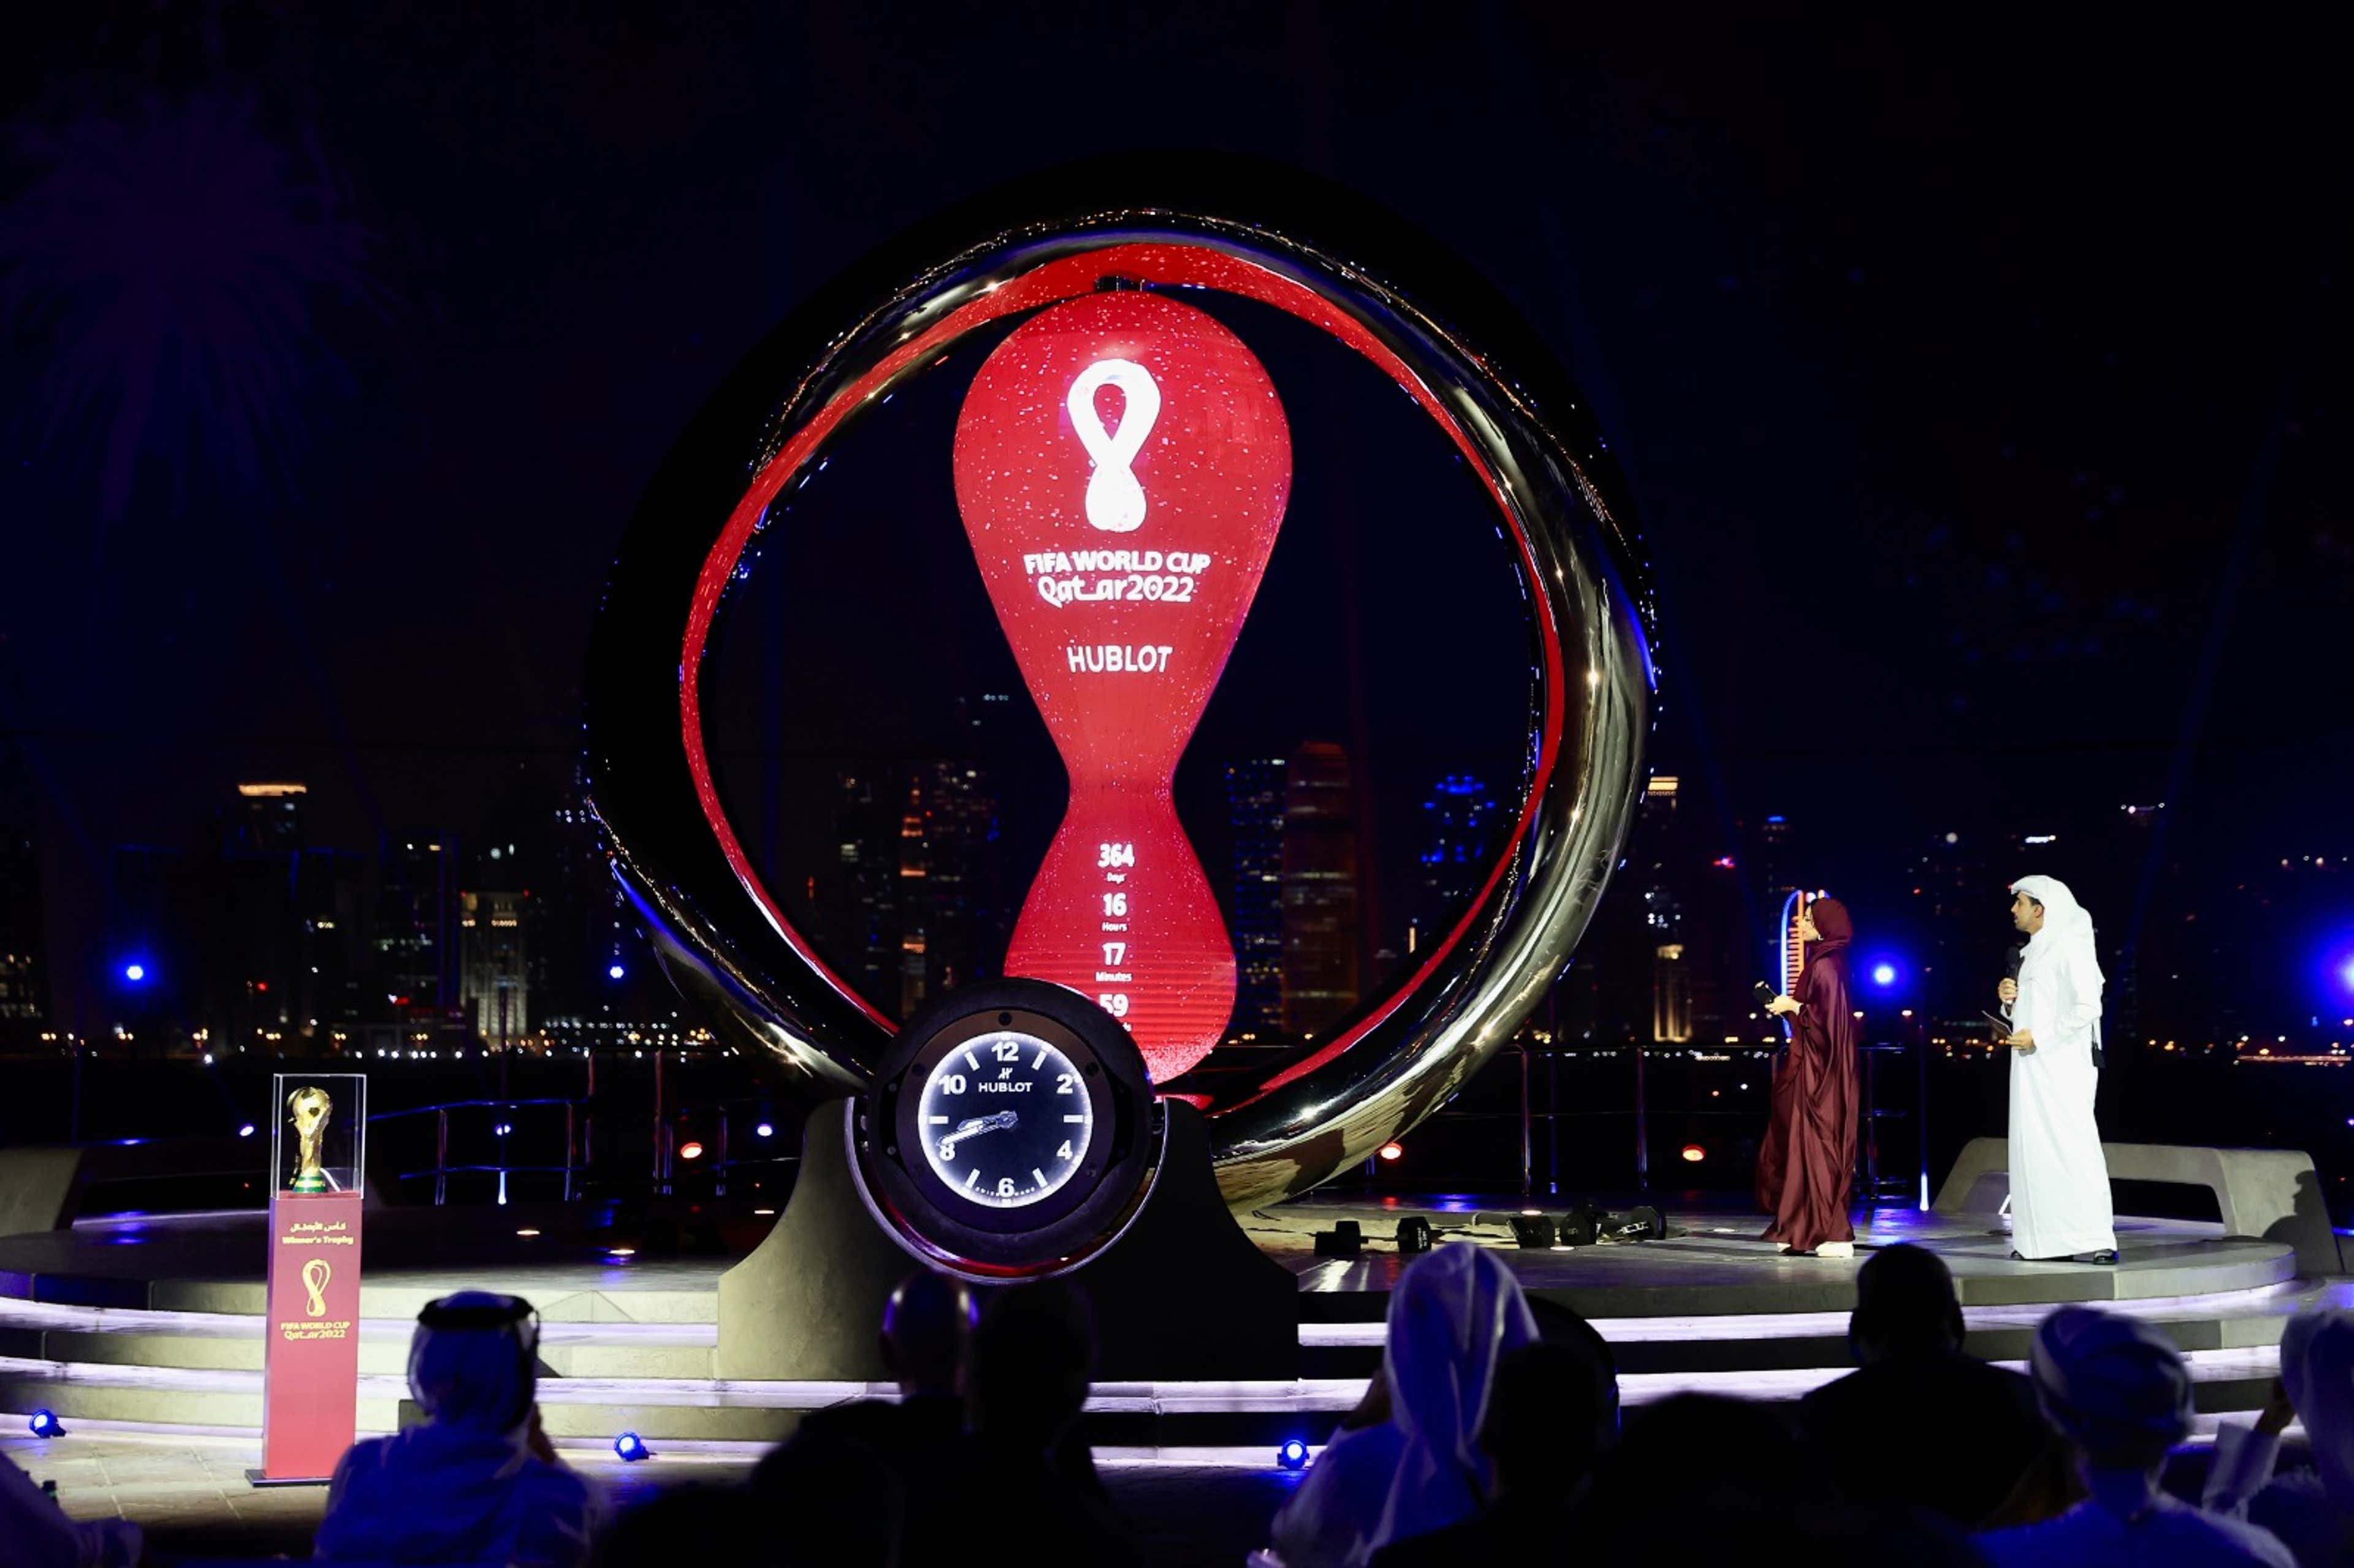 2022 World Cup Countdown Clock, Qatar